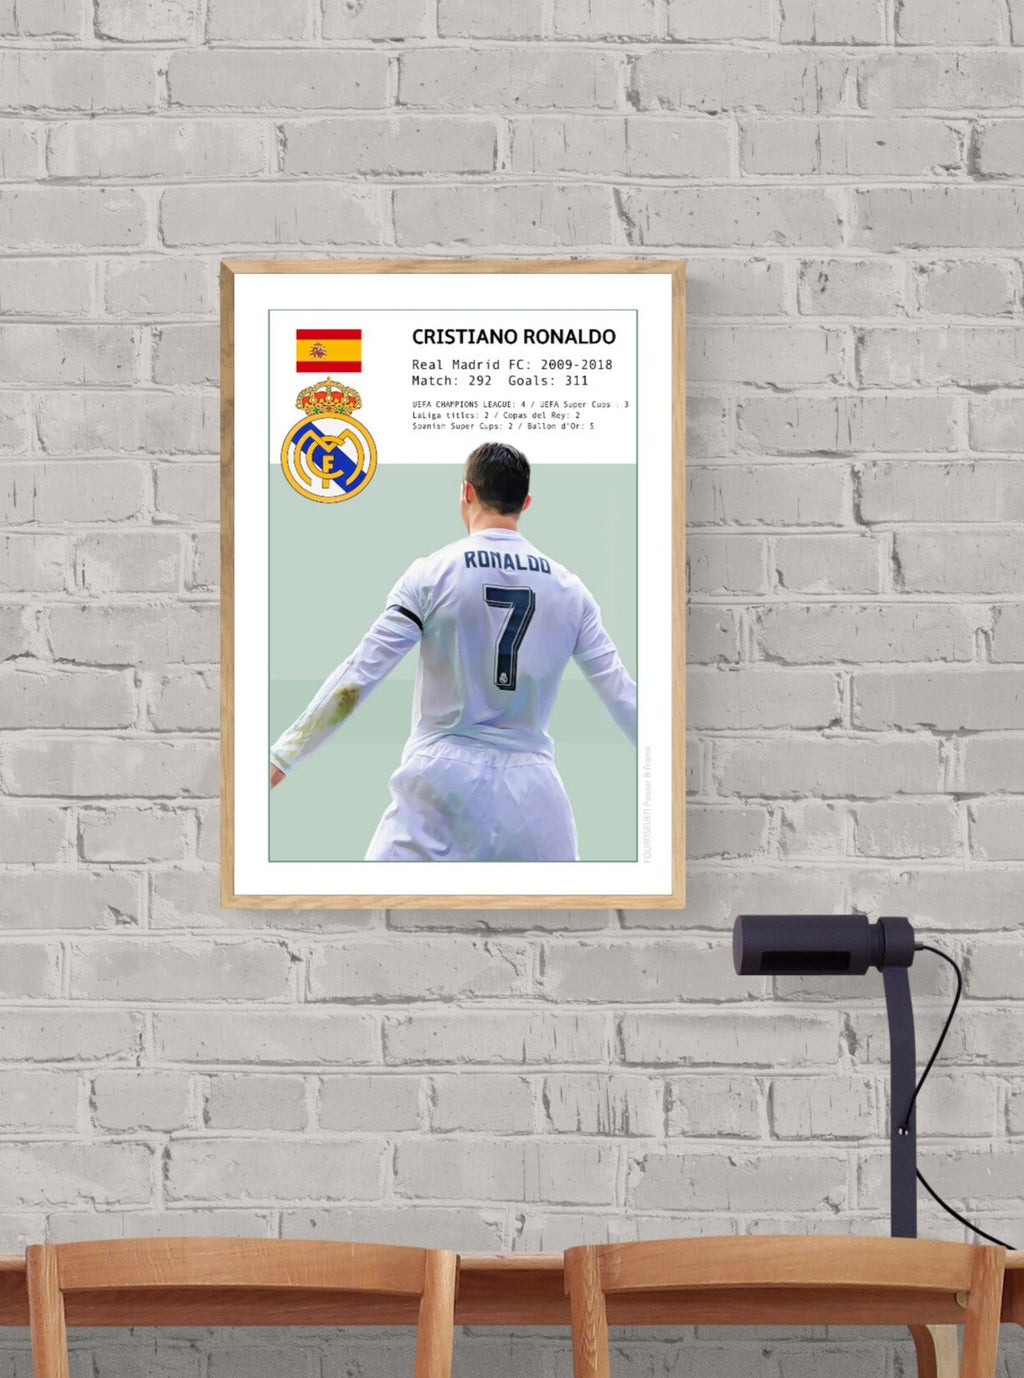 CRISTIANO RONALDO Real Madrid poster.